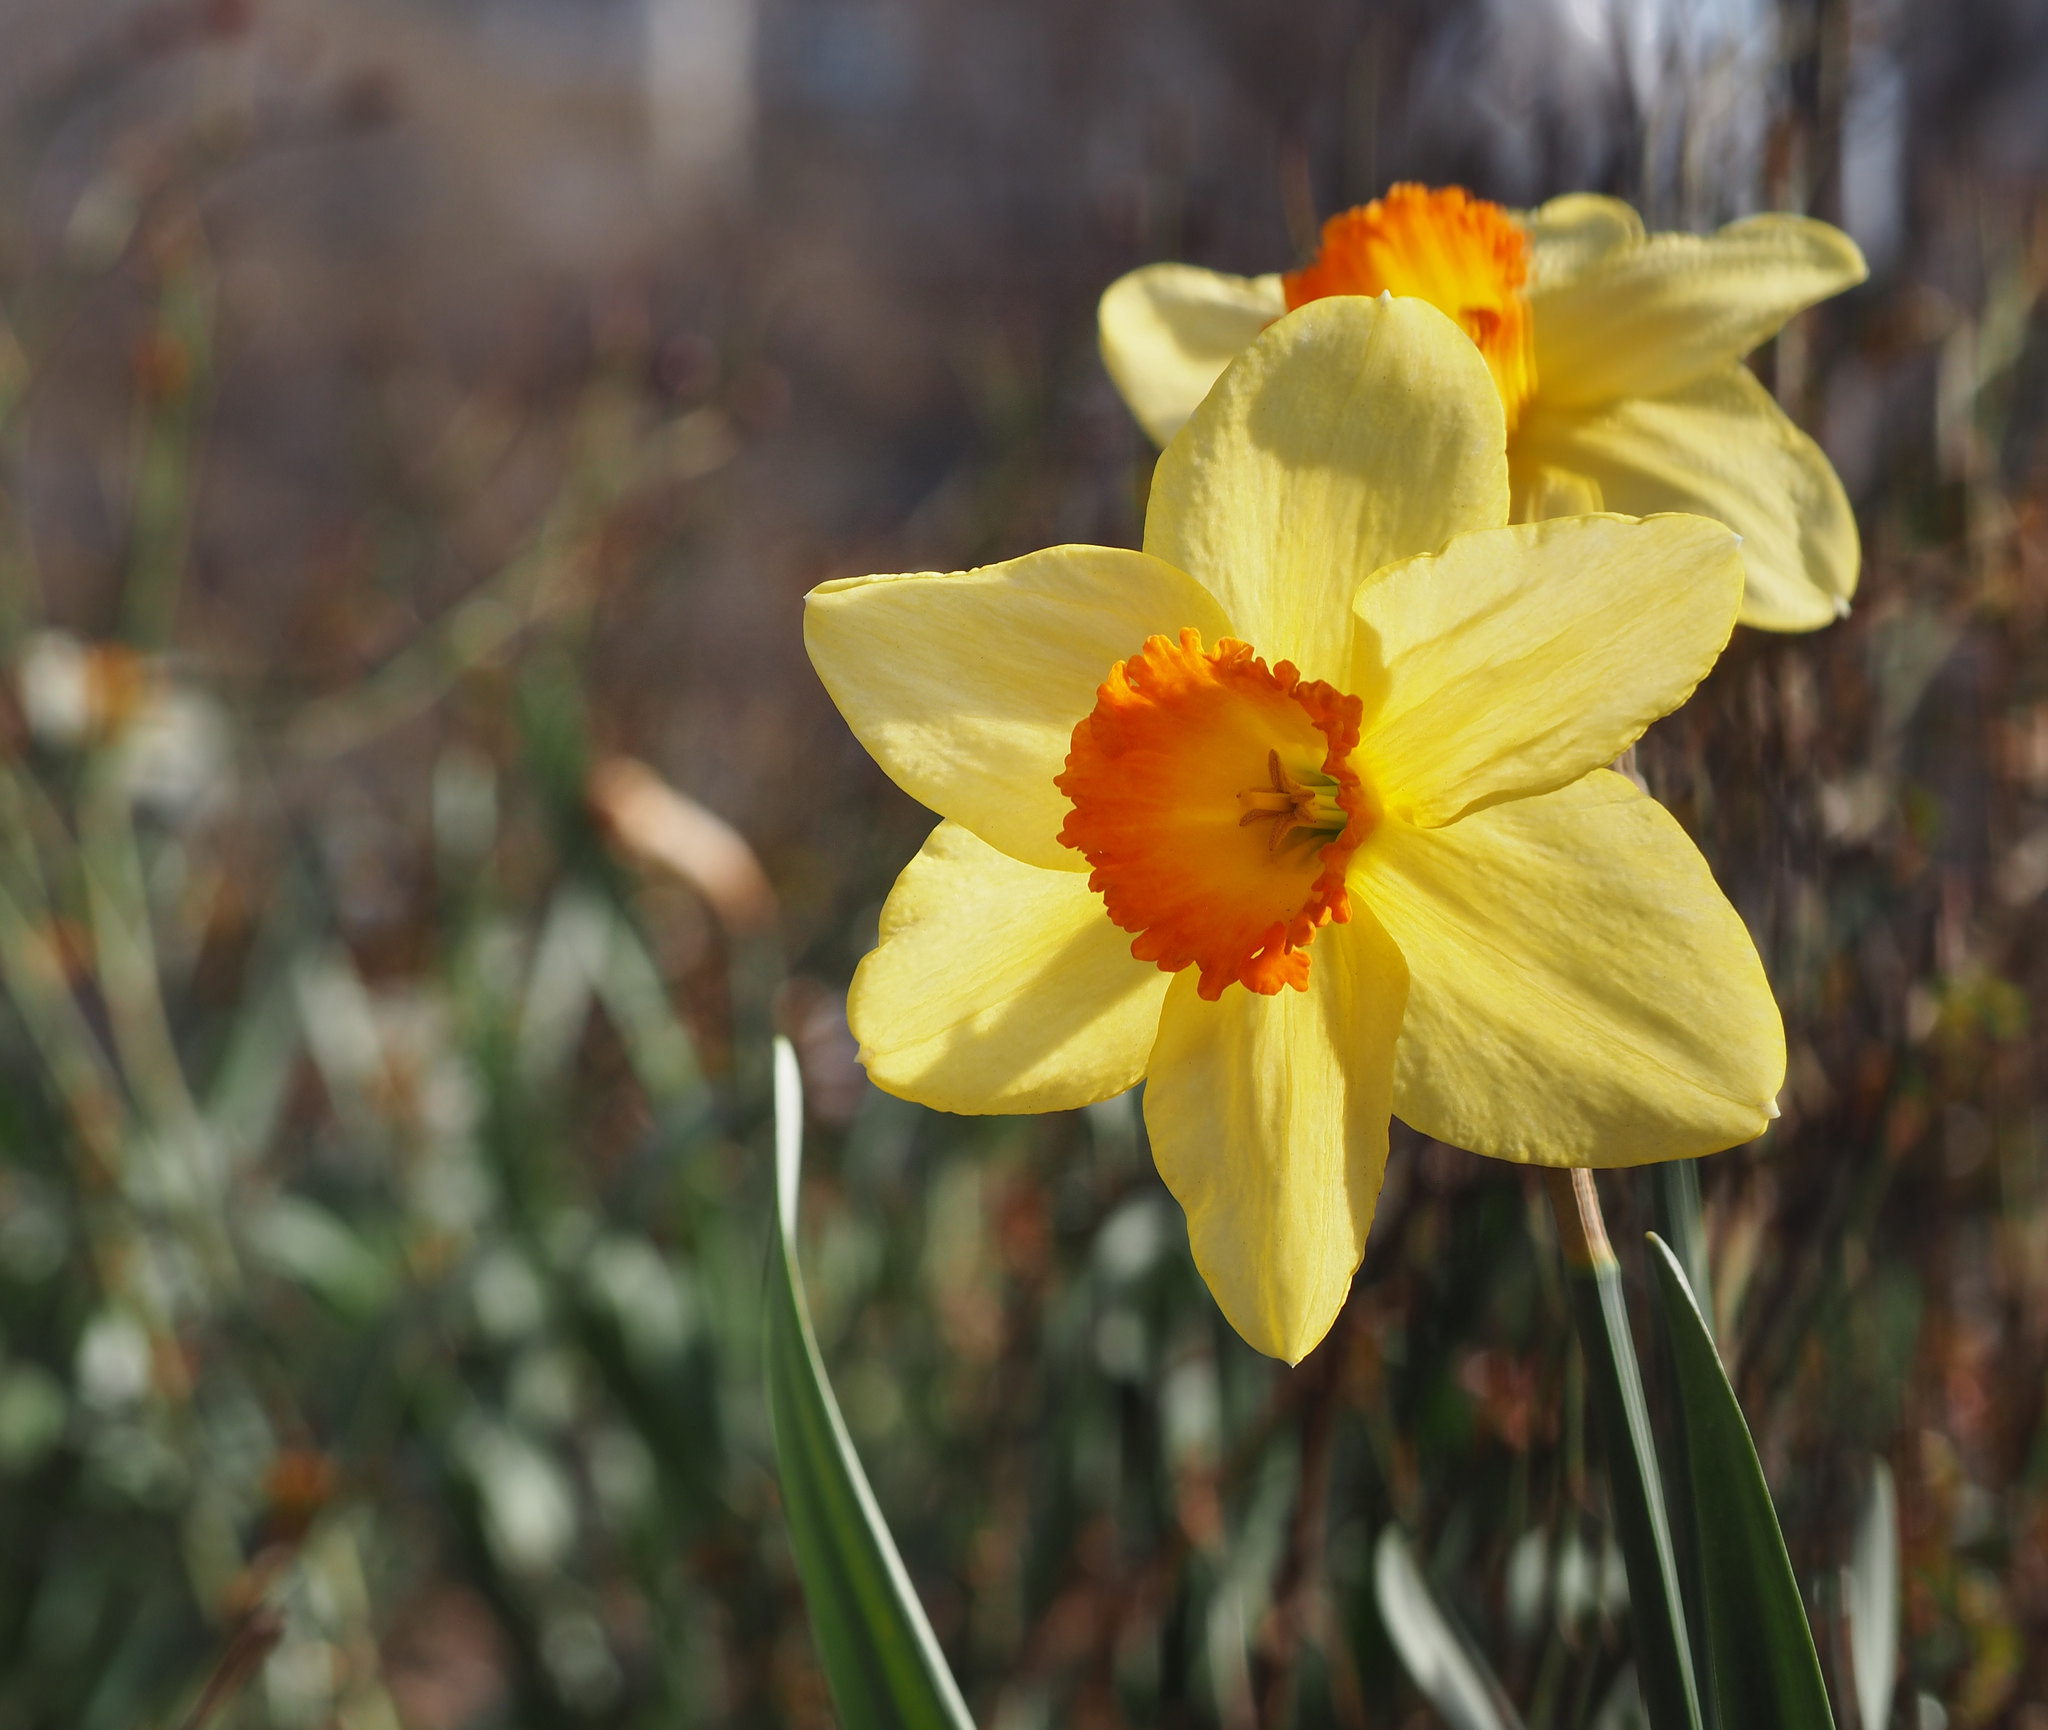 Daffodils - Washington Square Park